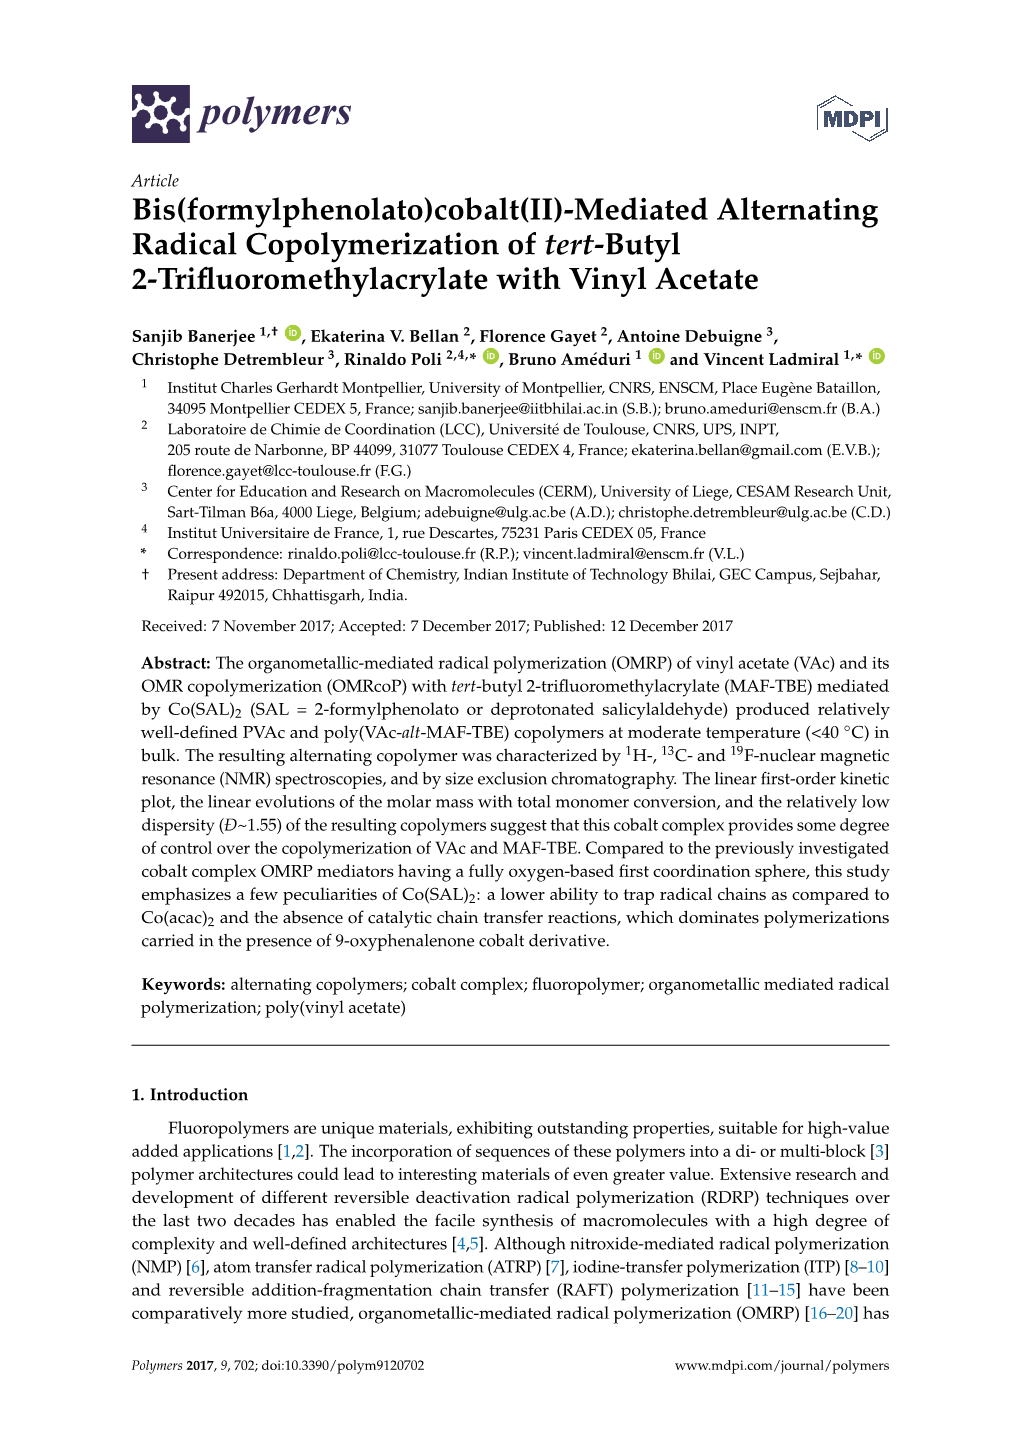 Cobalt(II)-Mediated Alternating Radical Copolymerization of Tert-Butyl 2-Triﬂuoromethylacrylate with Vinyl Acetate